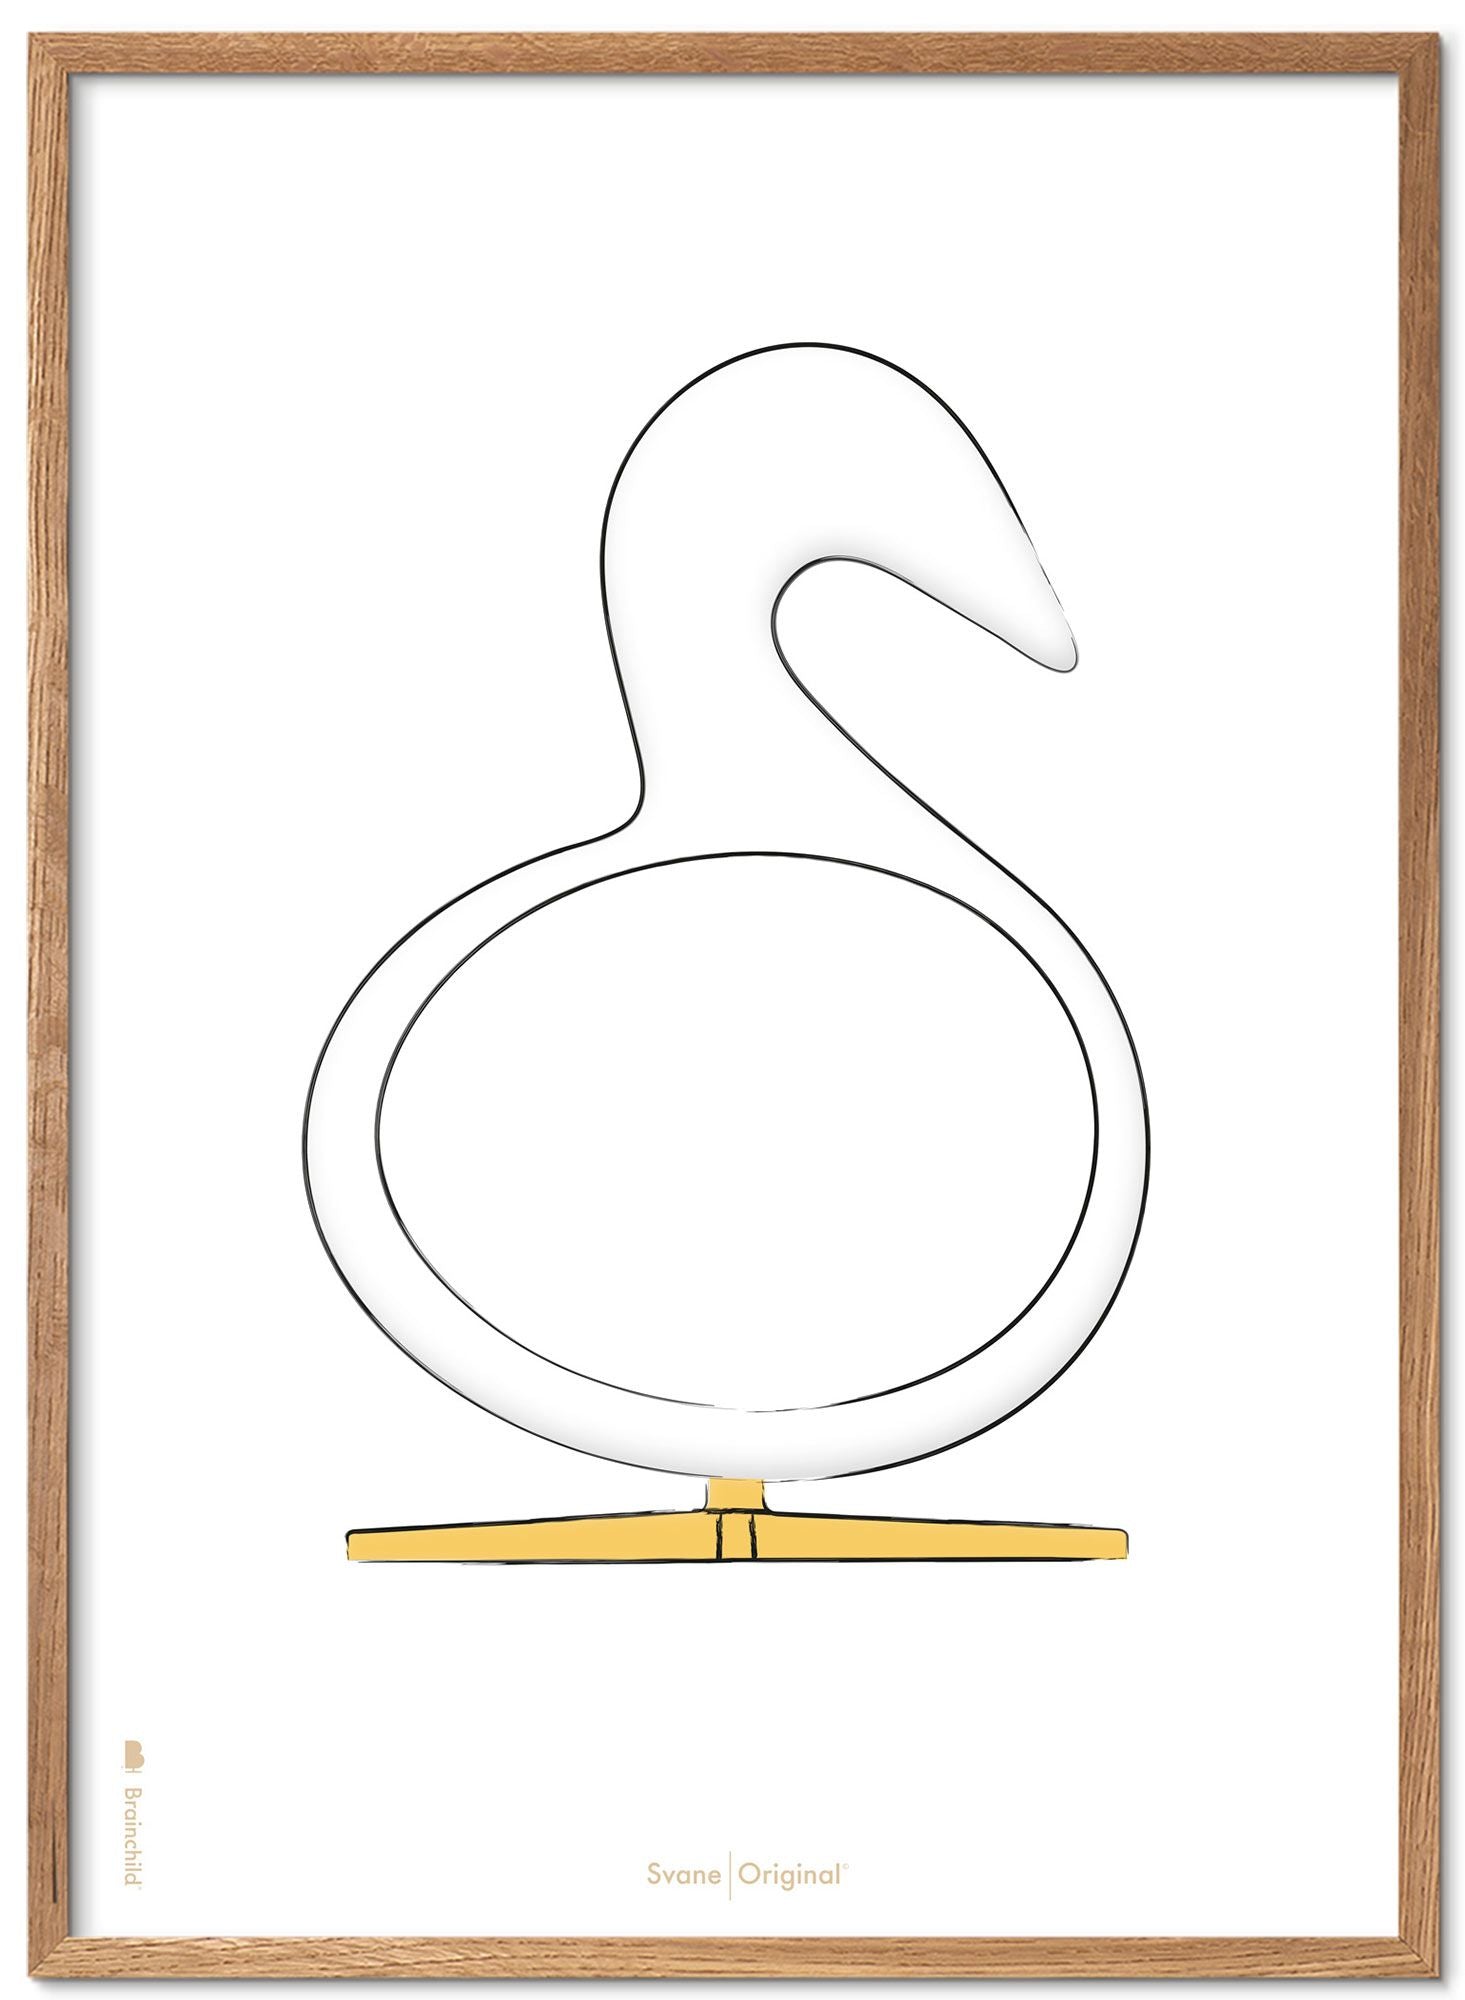 Brainchild Swan Design Sketch Poster Frame Made Of Light Wood A5, White Background